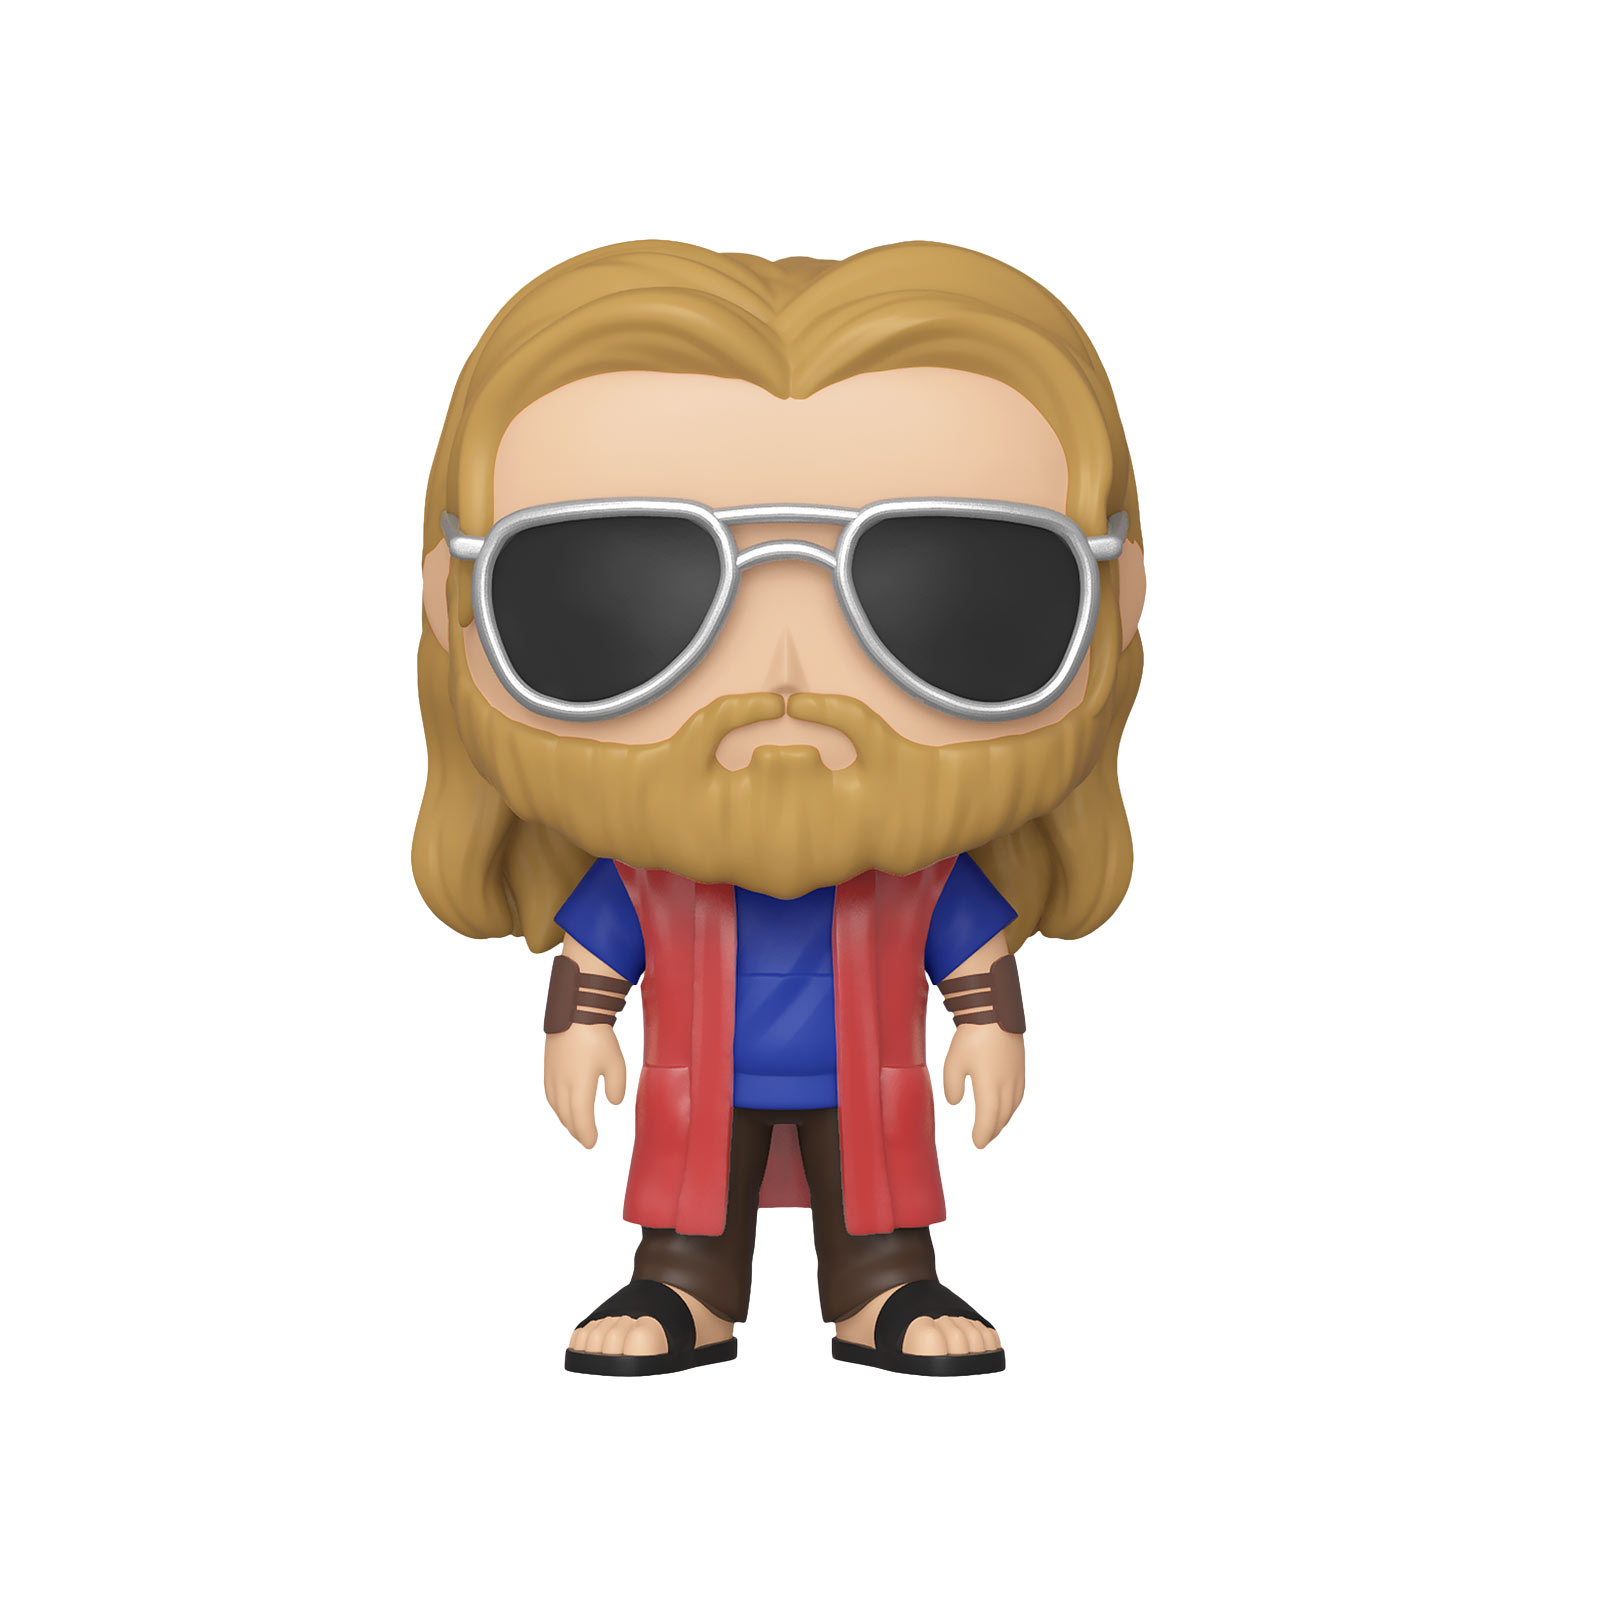 Avengers - Thor with Sunglasses Endgame Funko Pop bobblehead figure